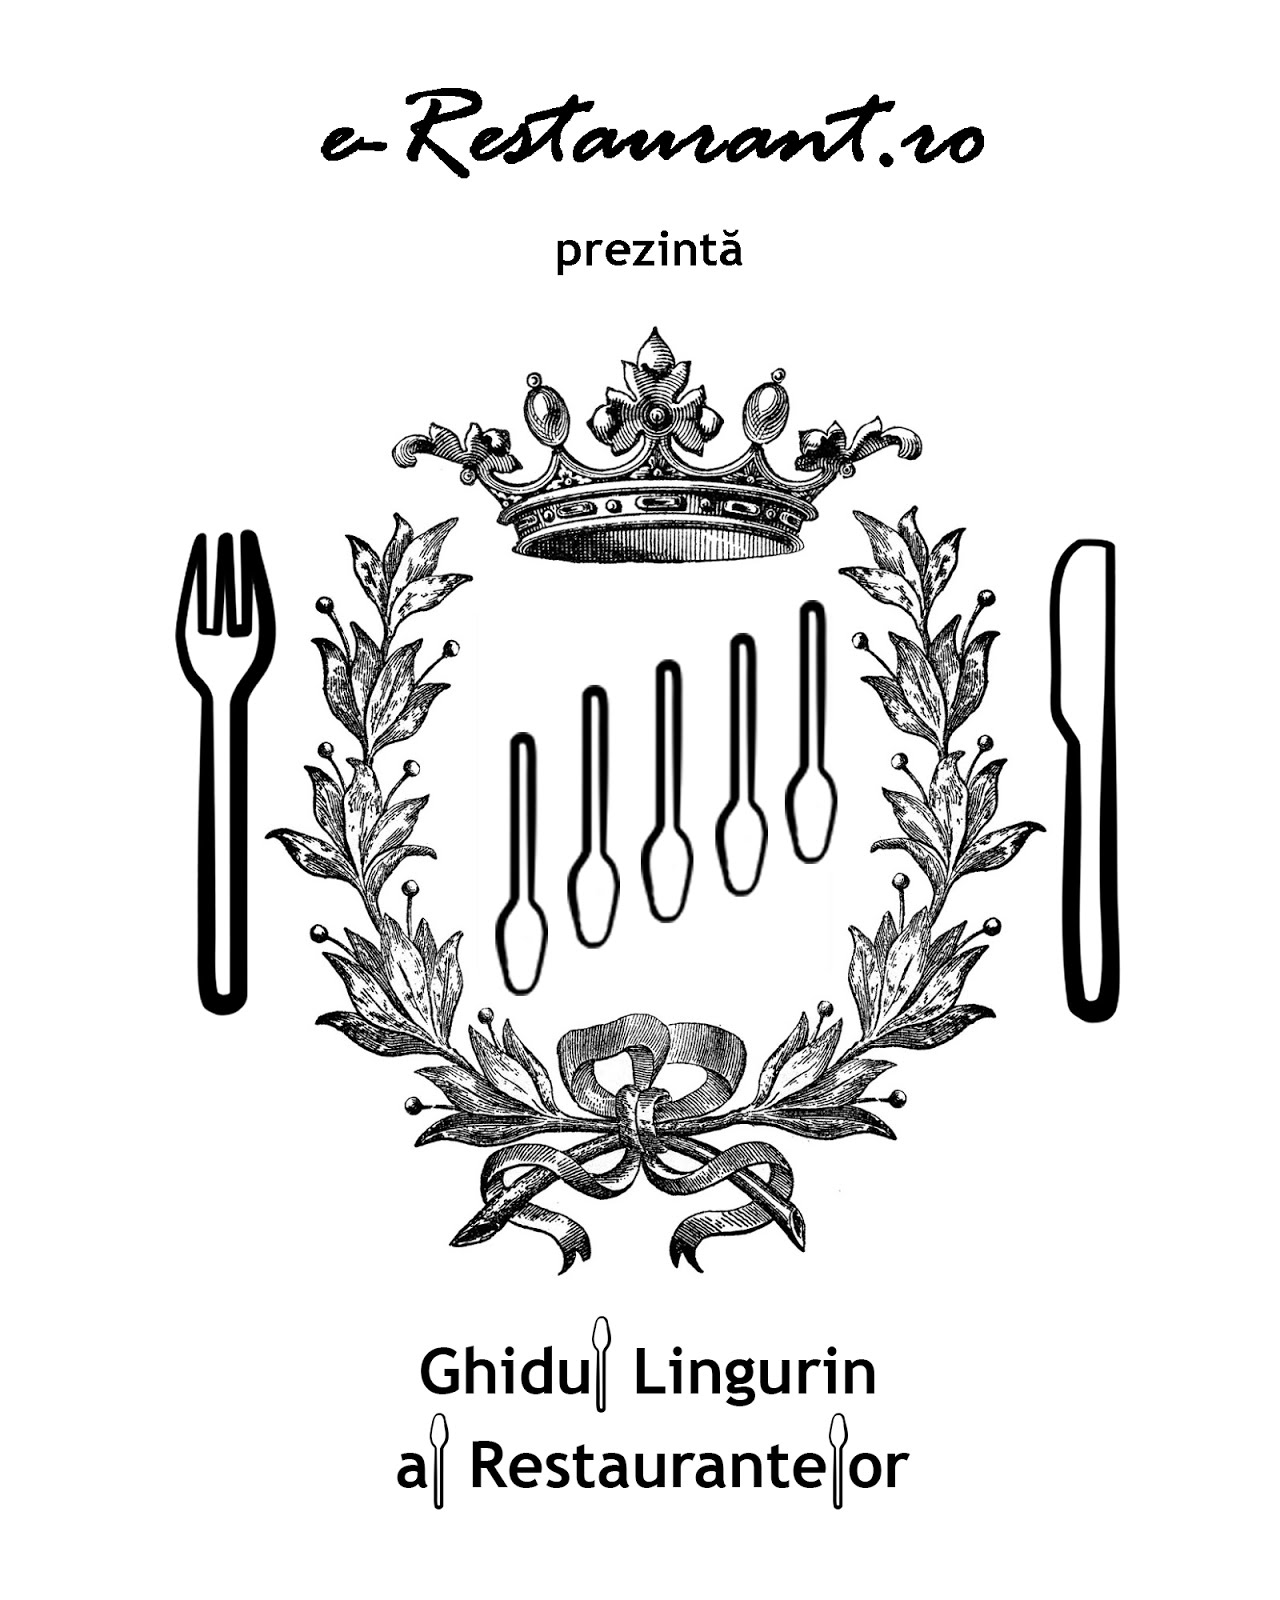 Ghidul Lingurin al Restaurantelor din România: